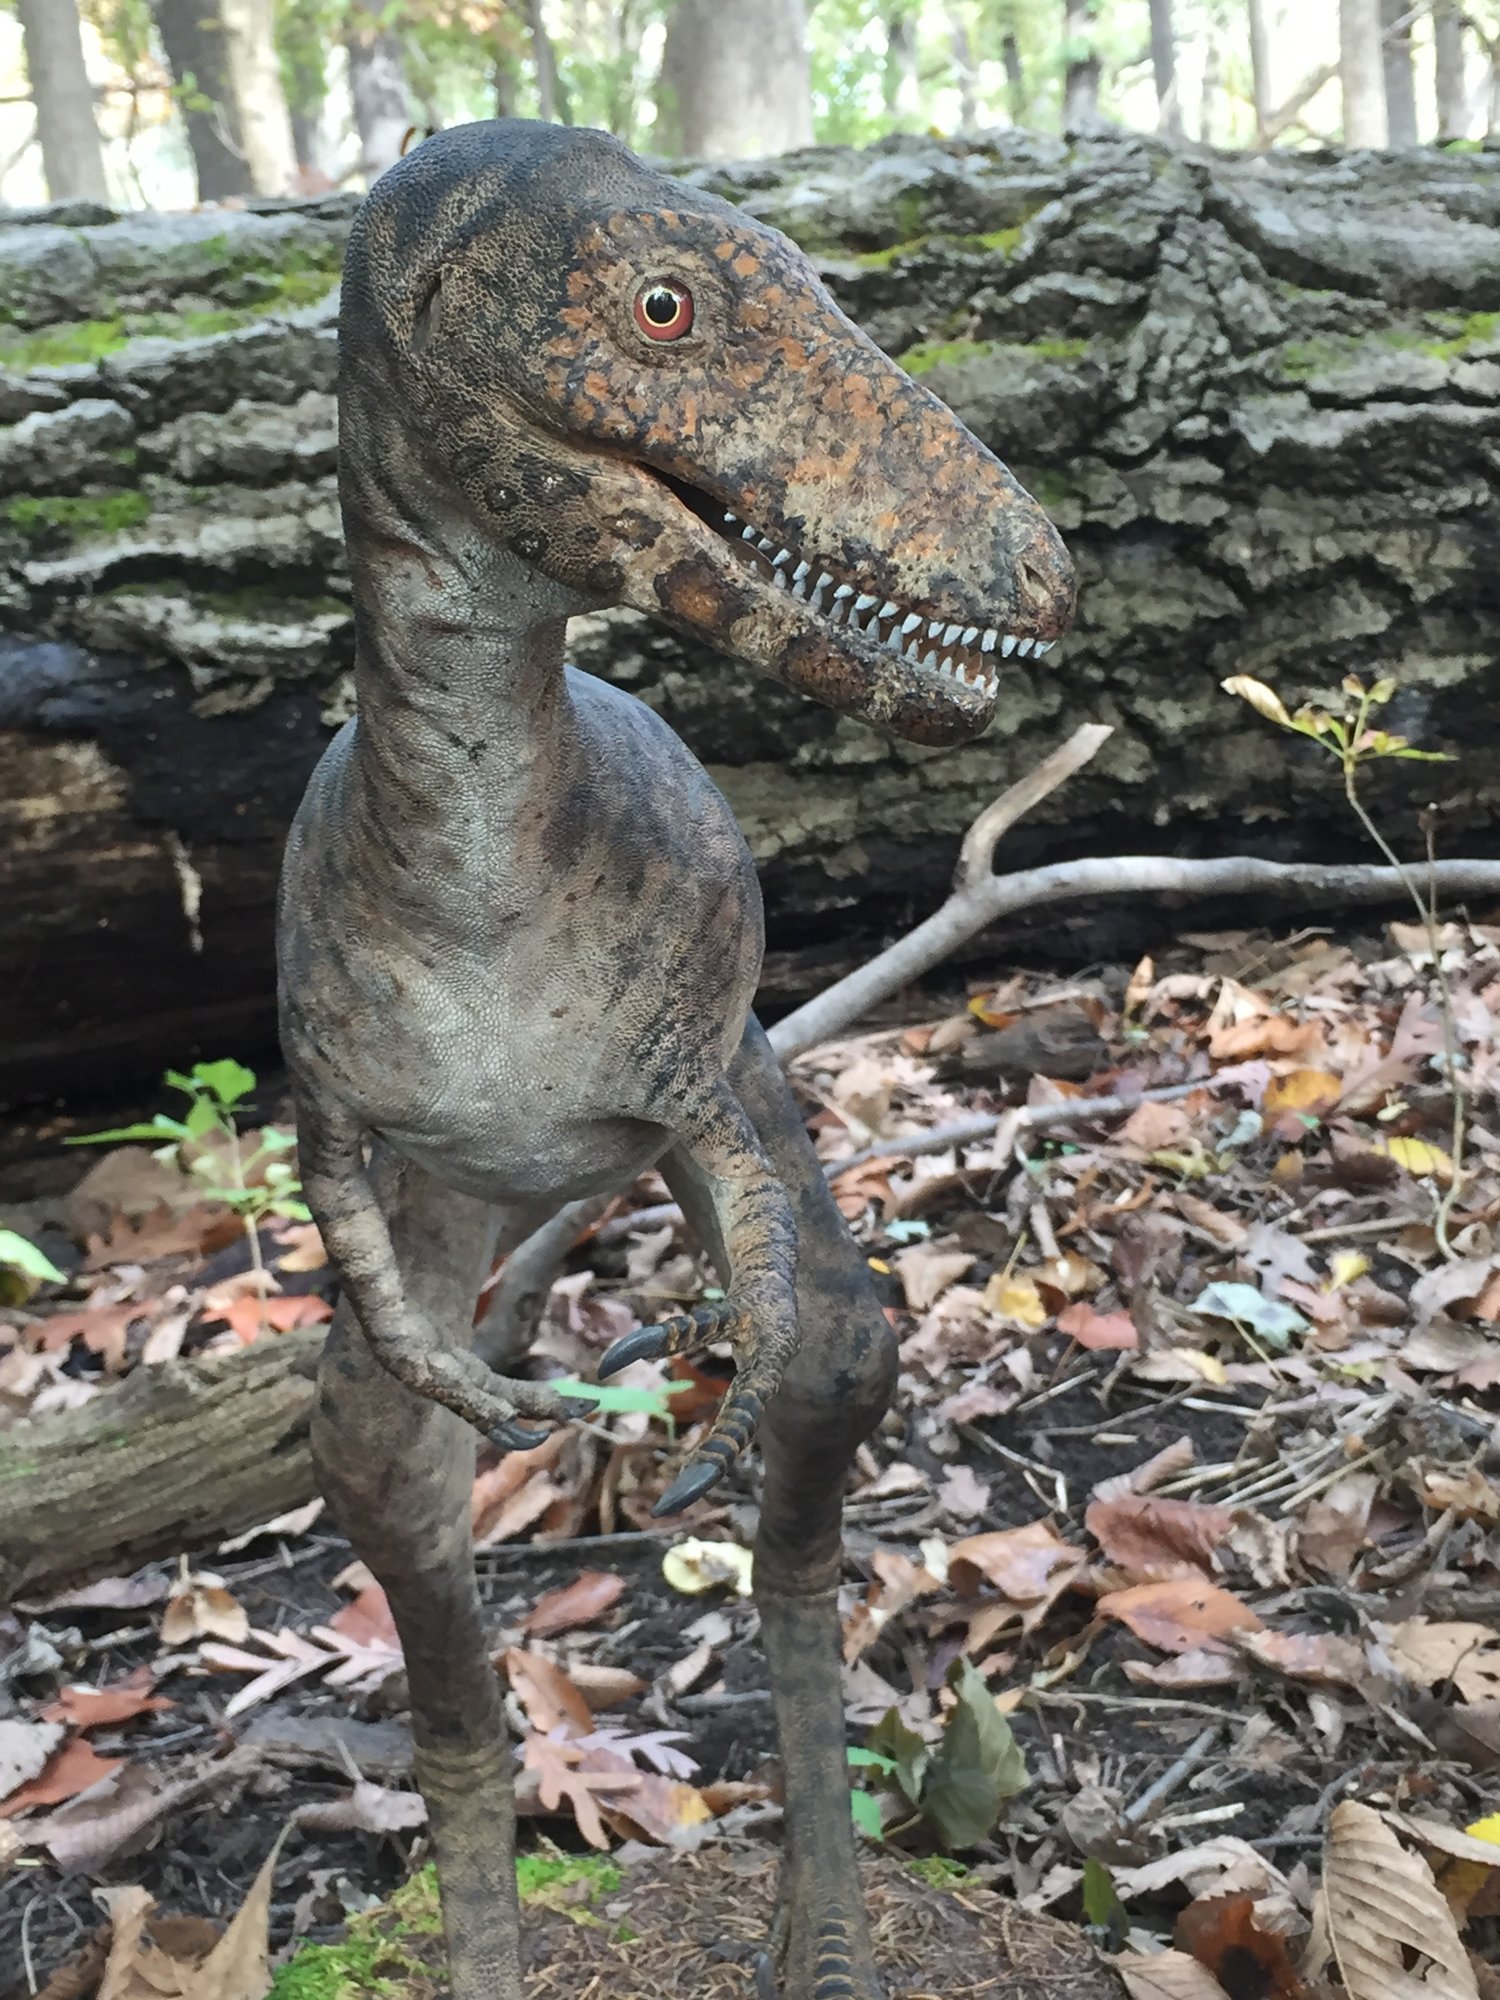 Baby T rex goes on sale on , sparking paleontologists' outcry